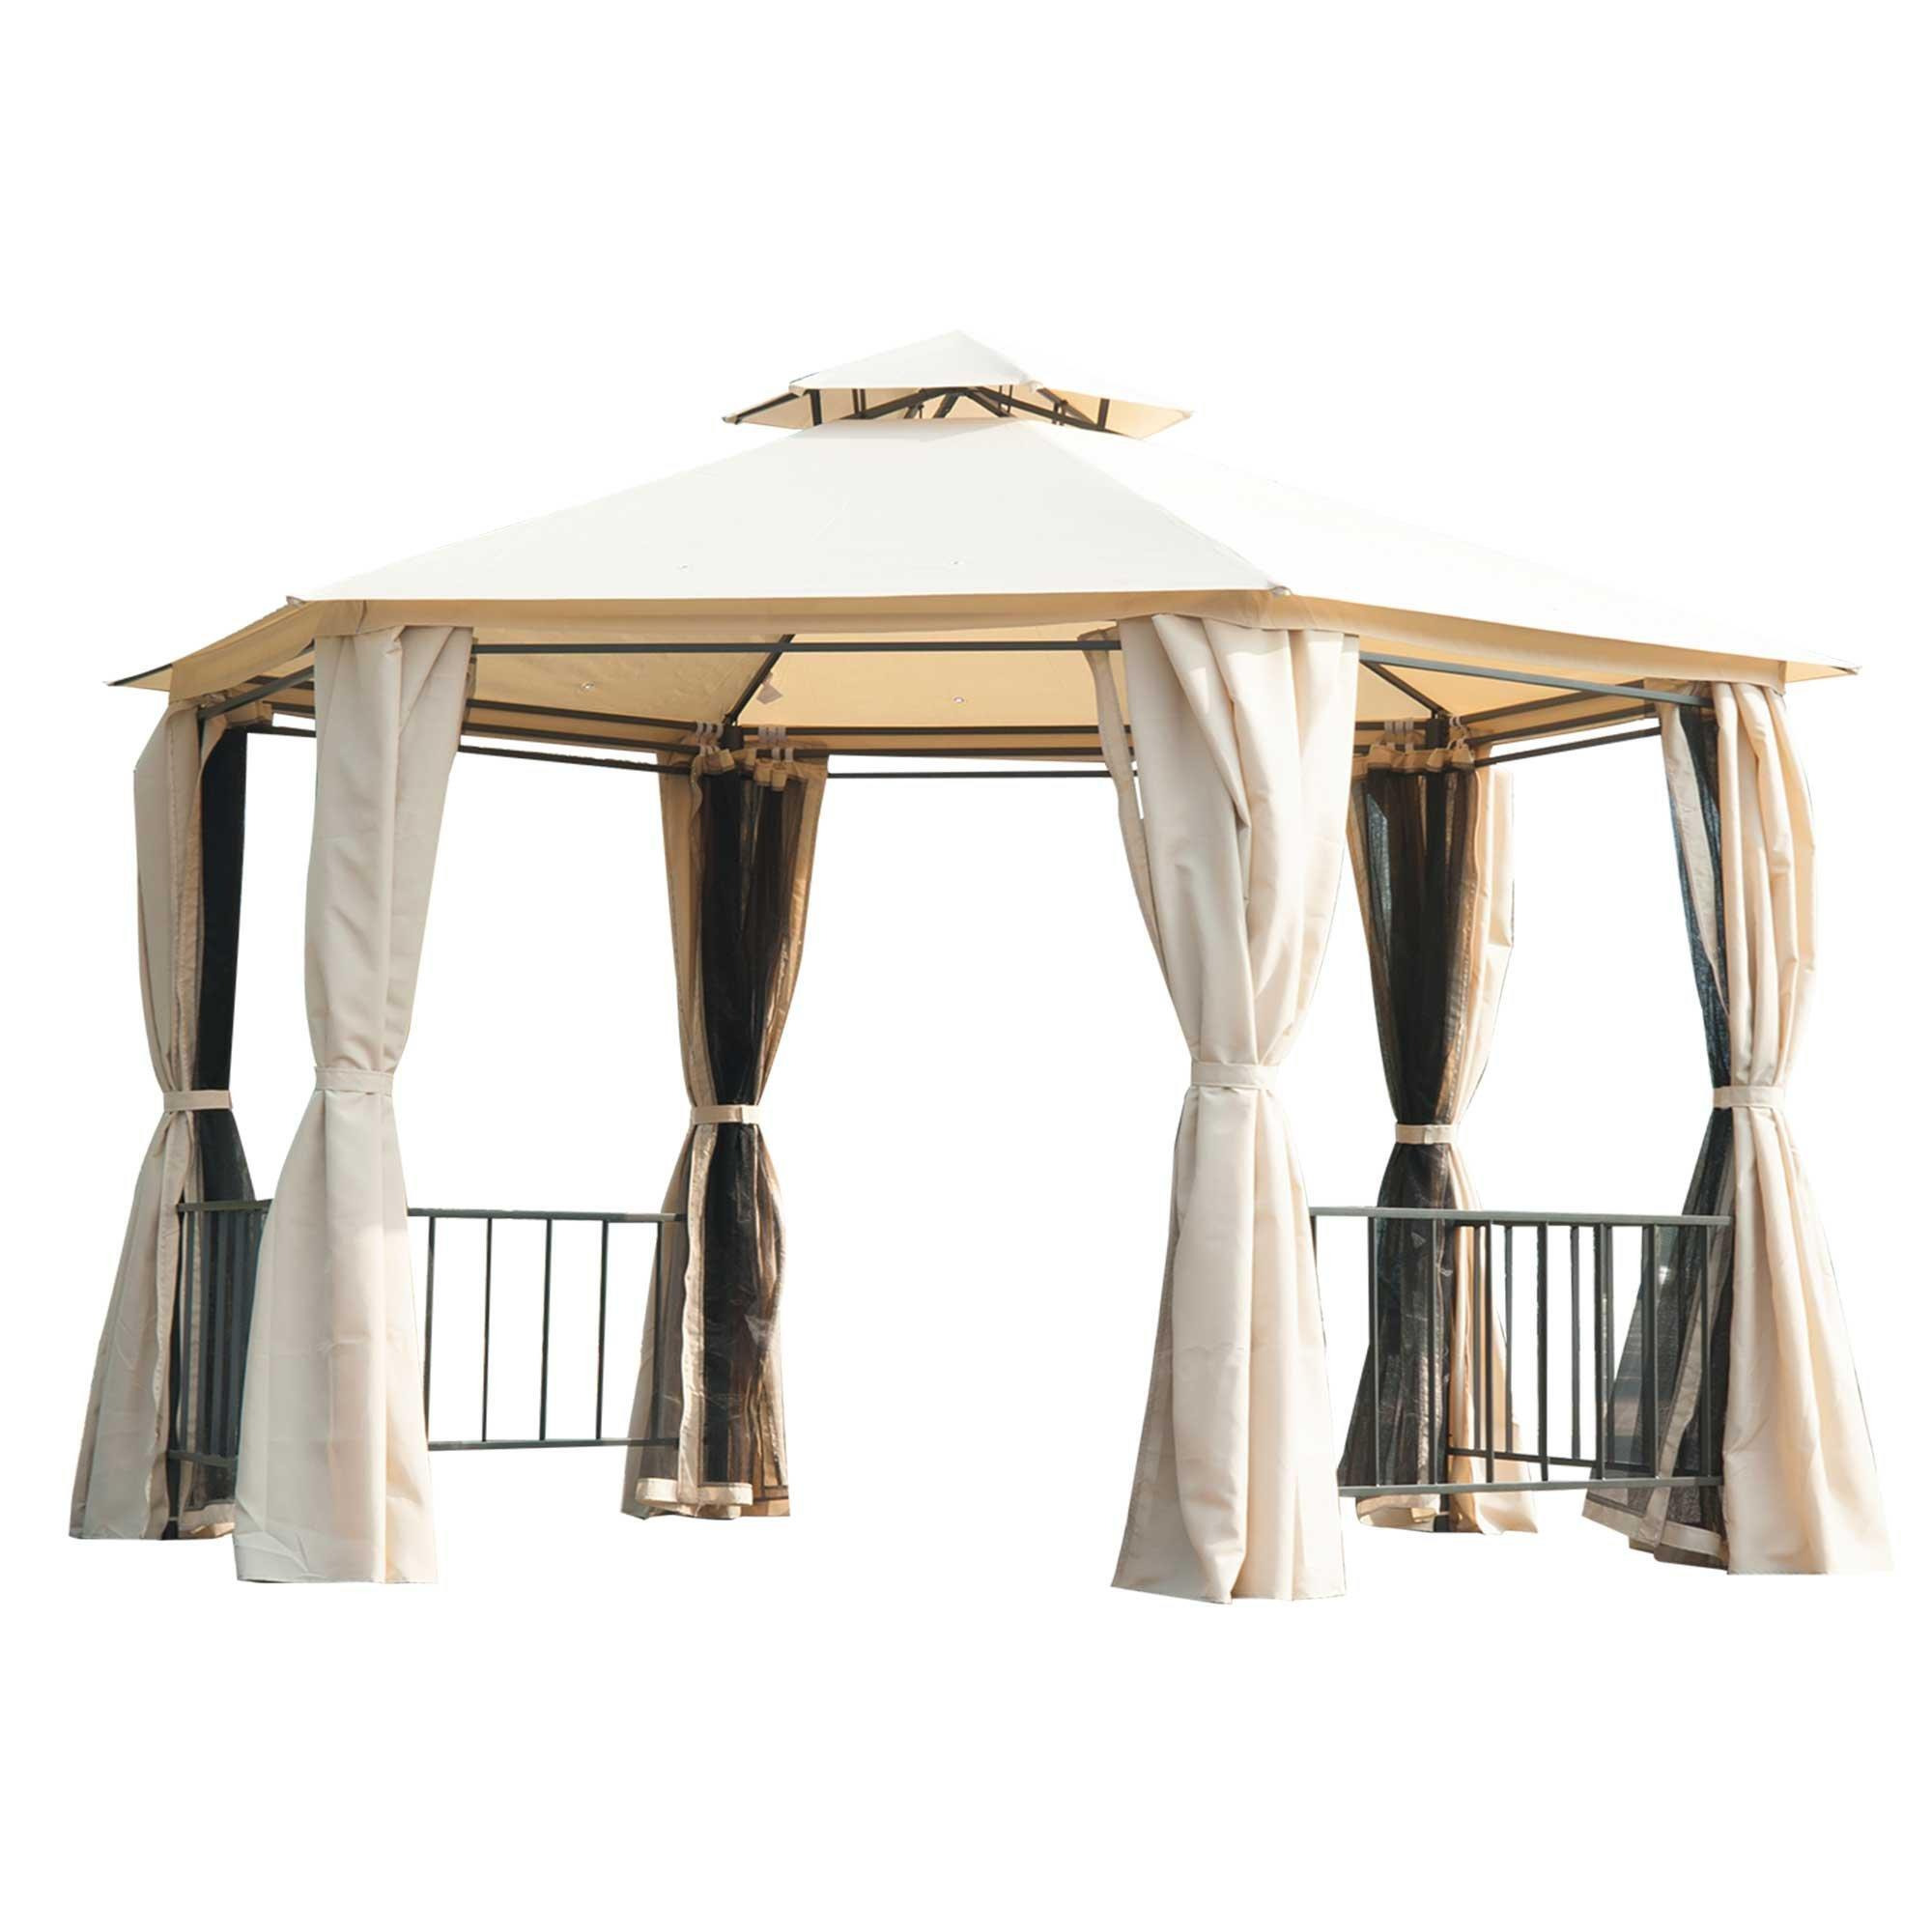 3 x 3Metre Gazebo Canopy 2 Tier Patio Shelter Steel for Garden - image 1